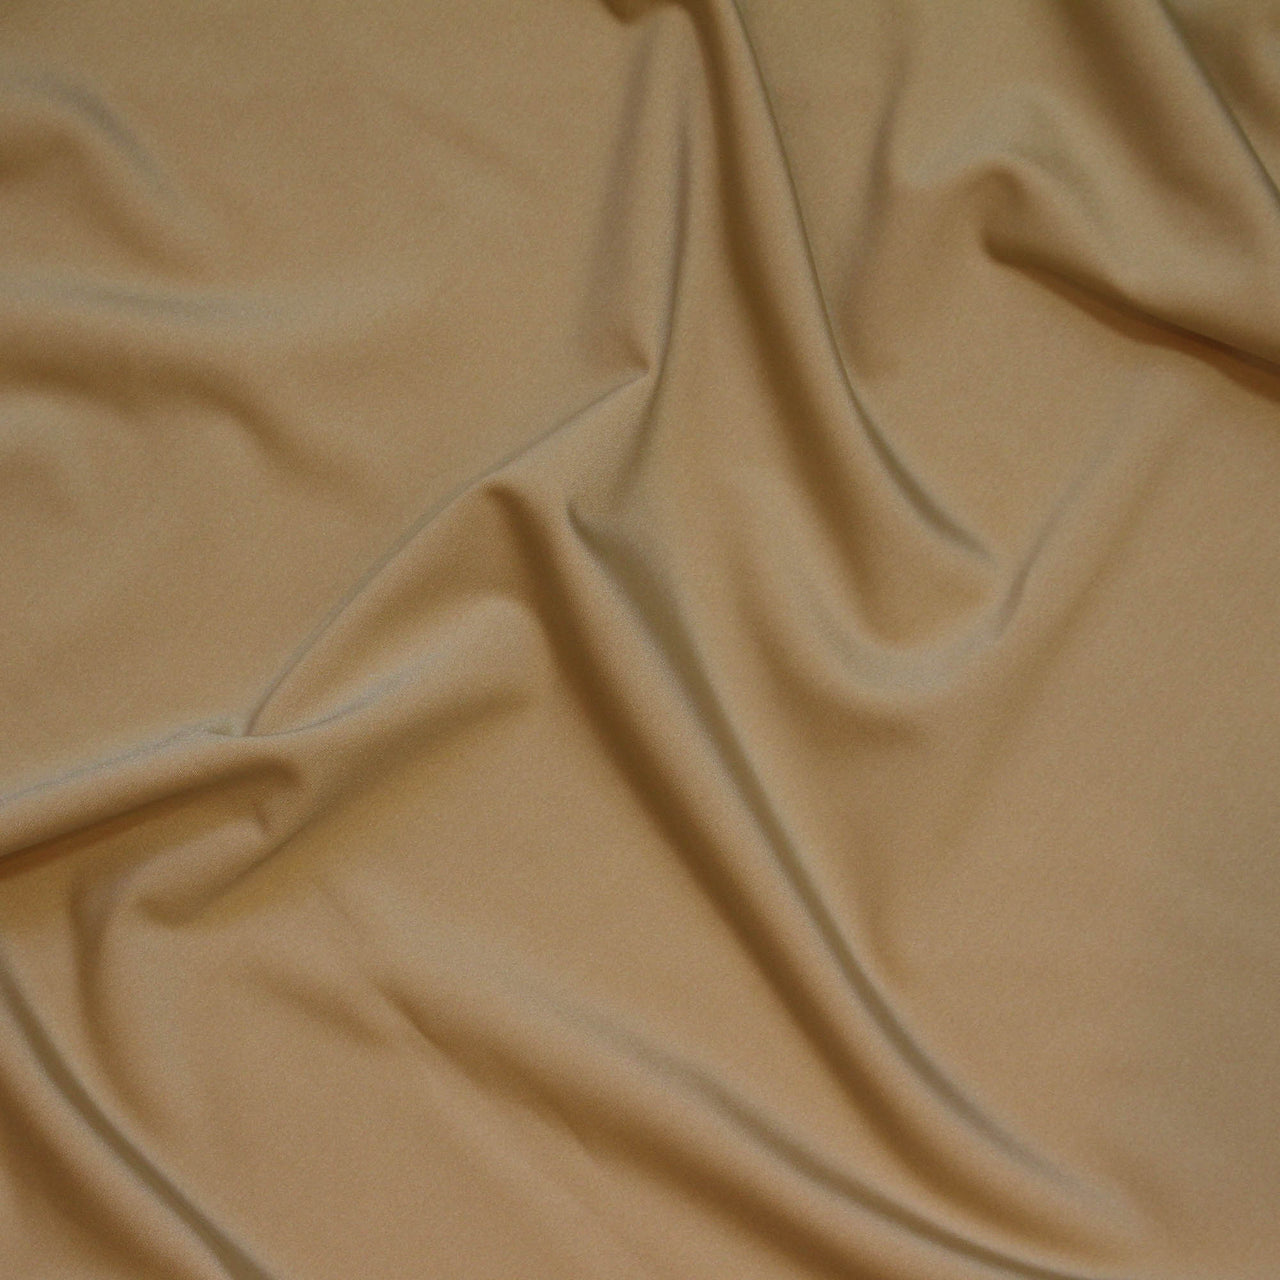 Skin / Flesh / Nude - Nylon Spandex Fabric - 4 Way All Way Stretch Superior Quality - Leotards, Dancewear